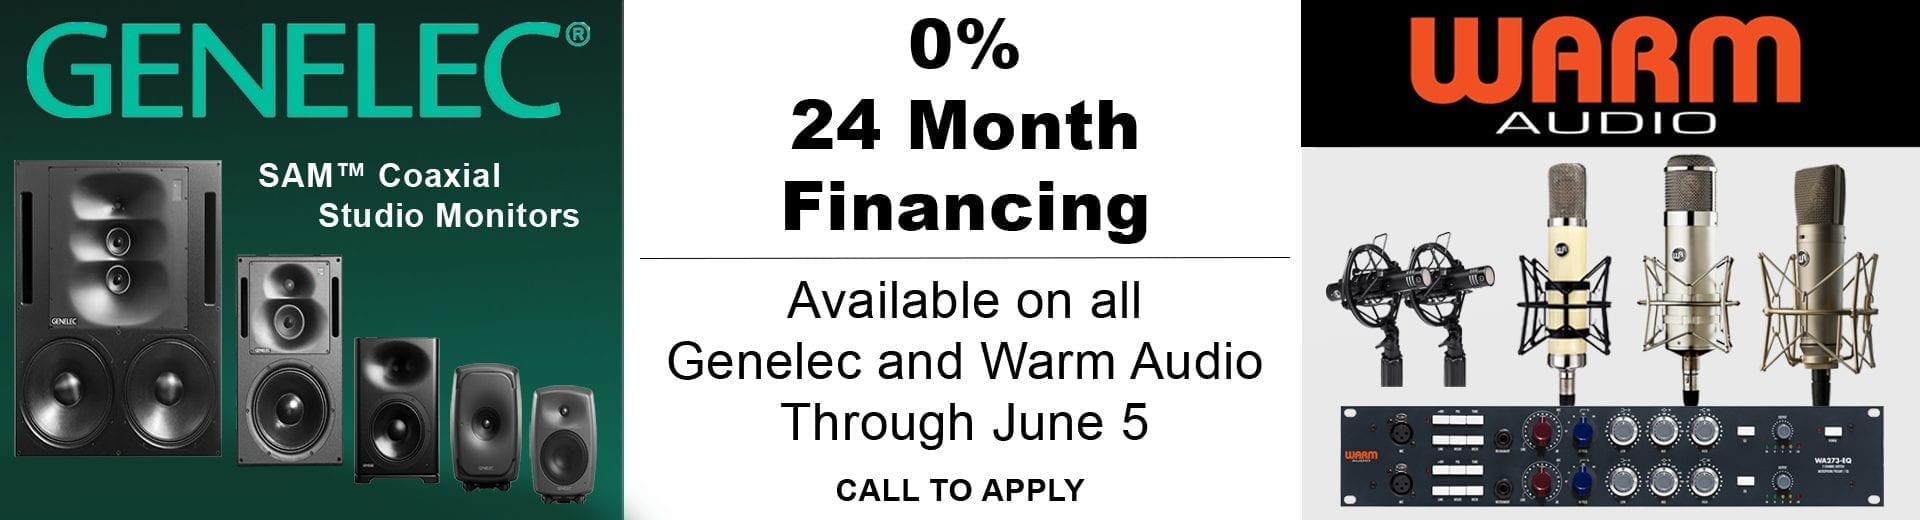 0% Interest / 24 Month Financing